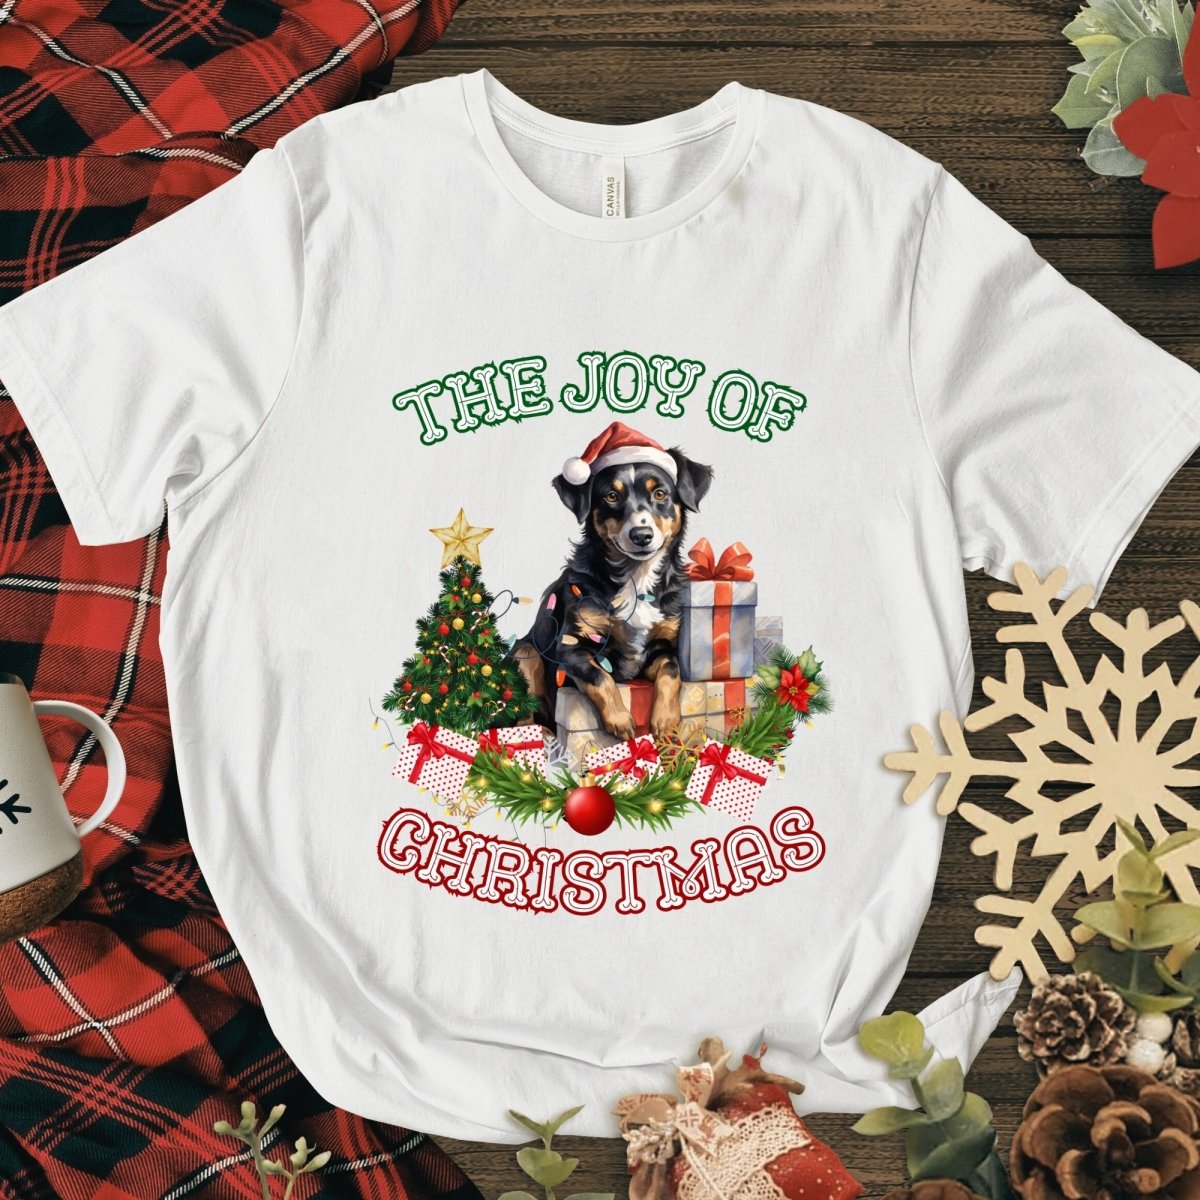 Christmas Shepherd Dog T-Shirt - High Quality Festive Unisex T-Shirt, Gift for Shepherd Owner, Gift for Doglovers, Cute Xmas Dog Tee - Everything Pixel